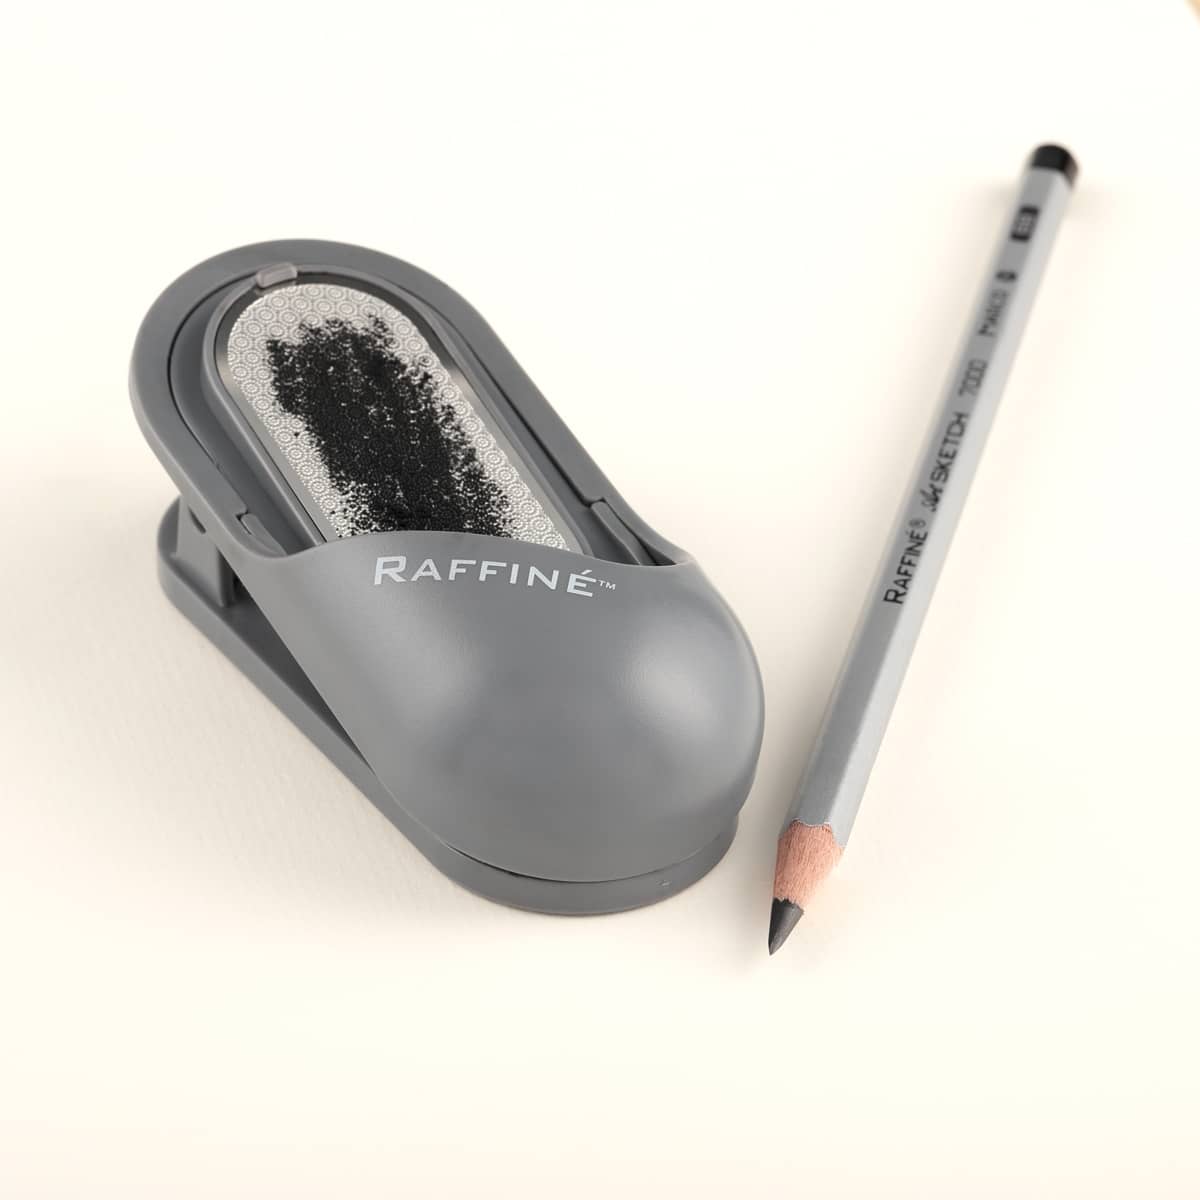 raffine pencil and charcoal grinder